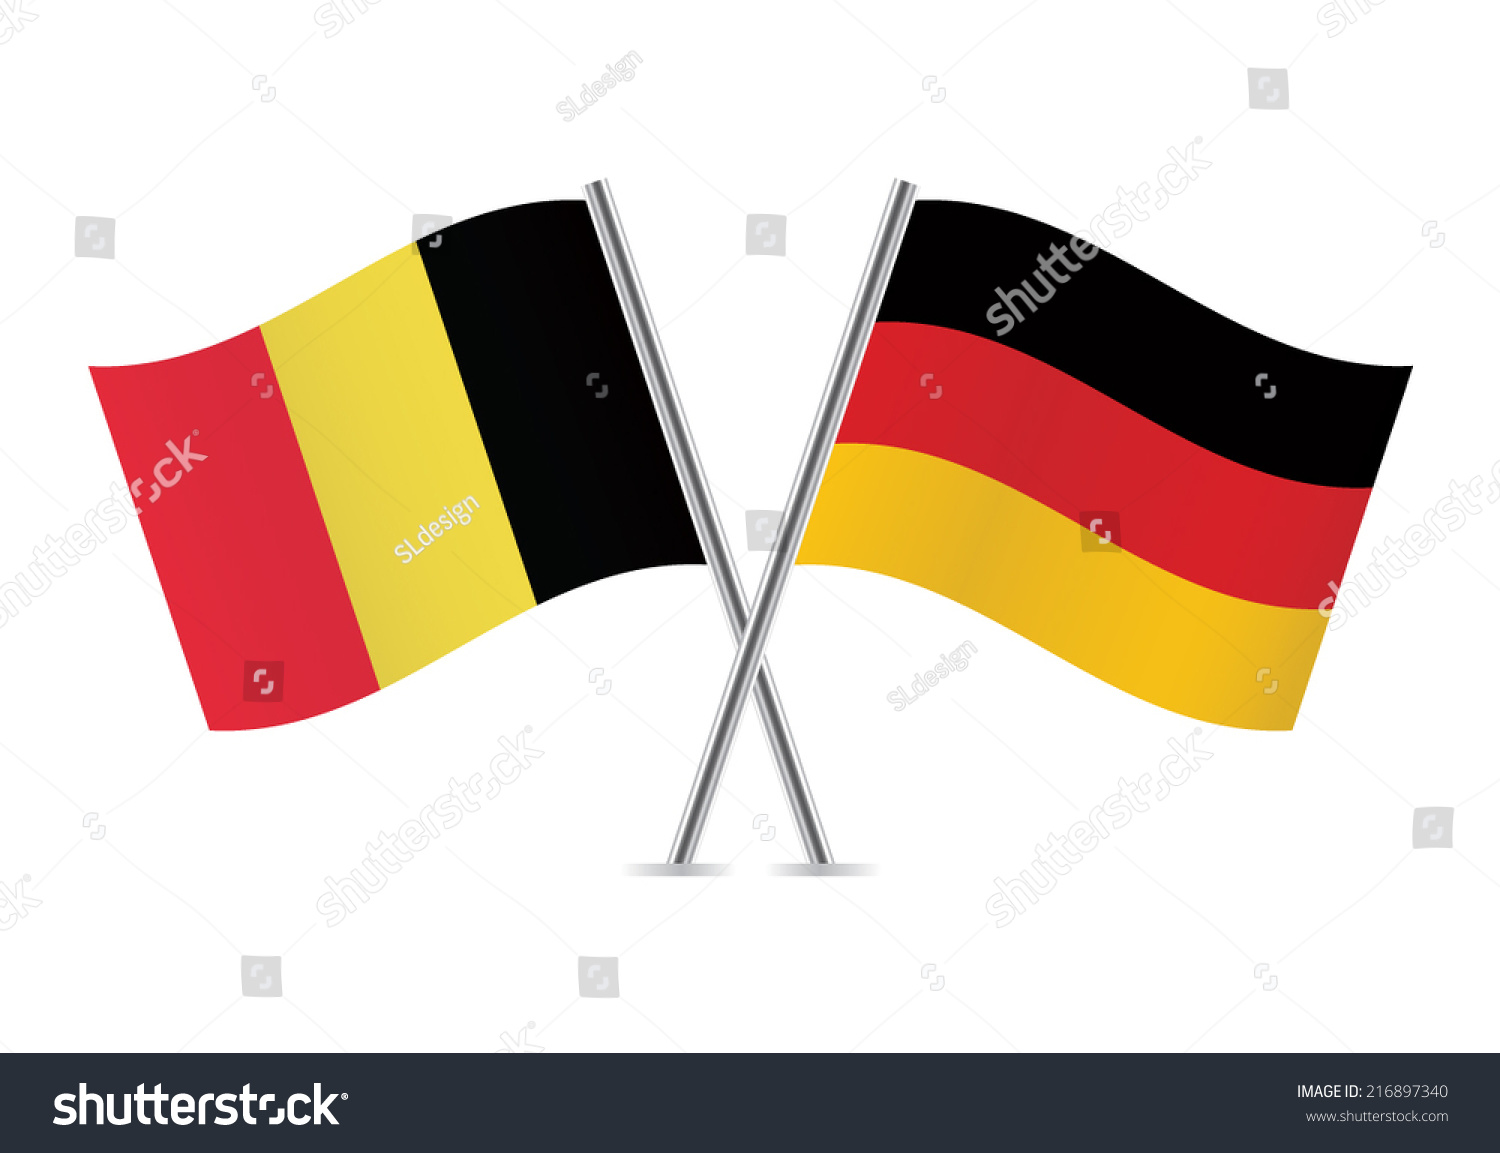 German And Belgian Flags. Vector Illustration. - 216897340 : Shutterstock